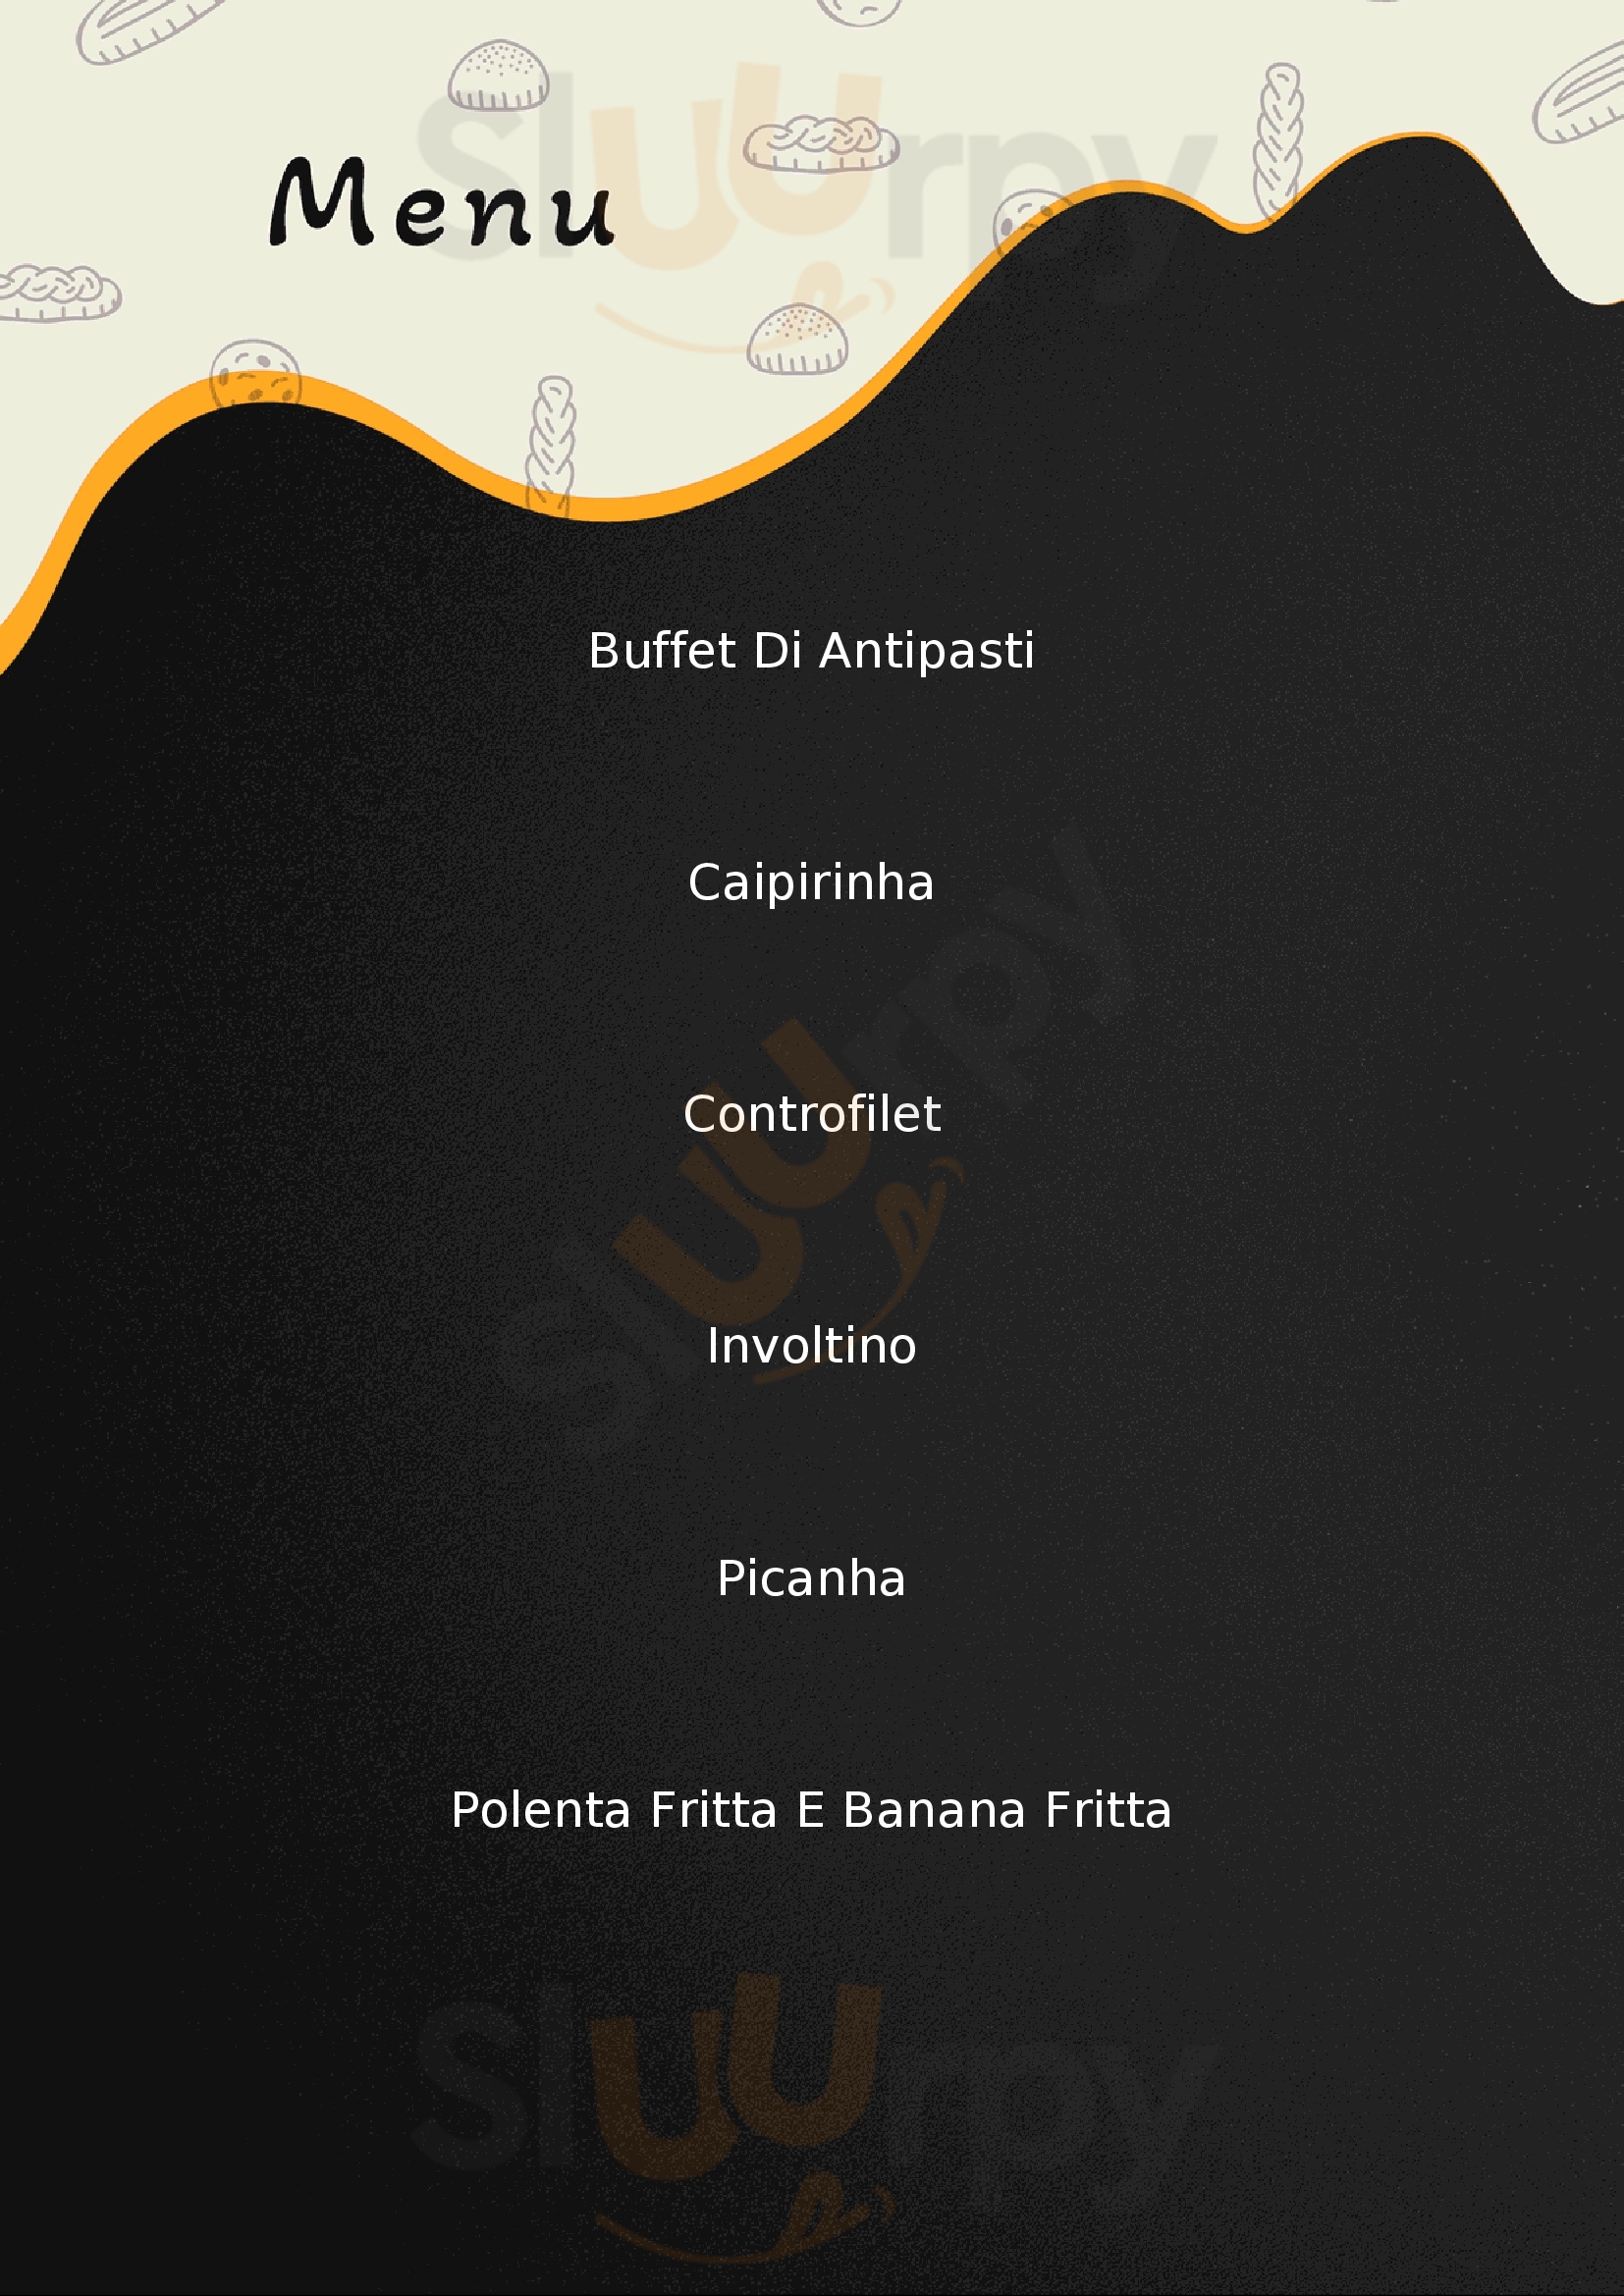 Churrascaria Brasa Brazilian Restaurant Milano menù 1 pagina